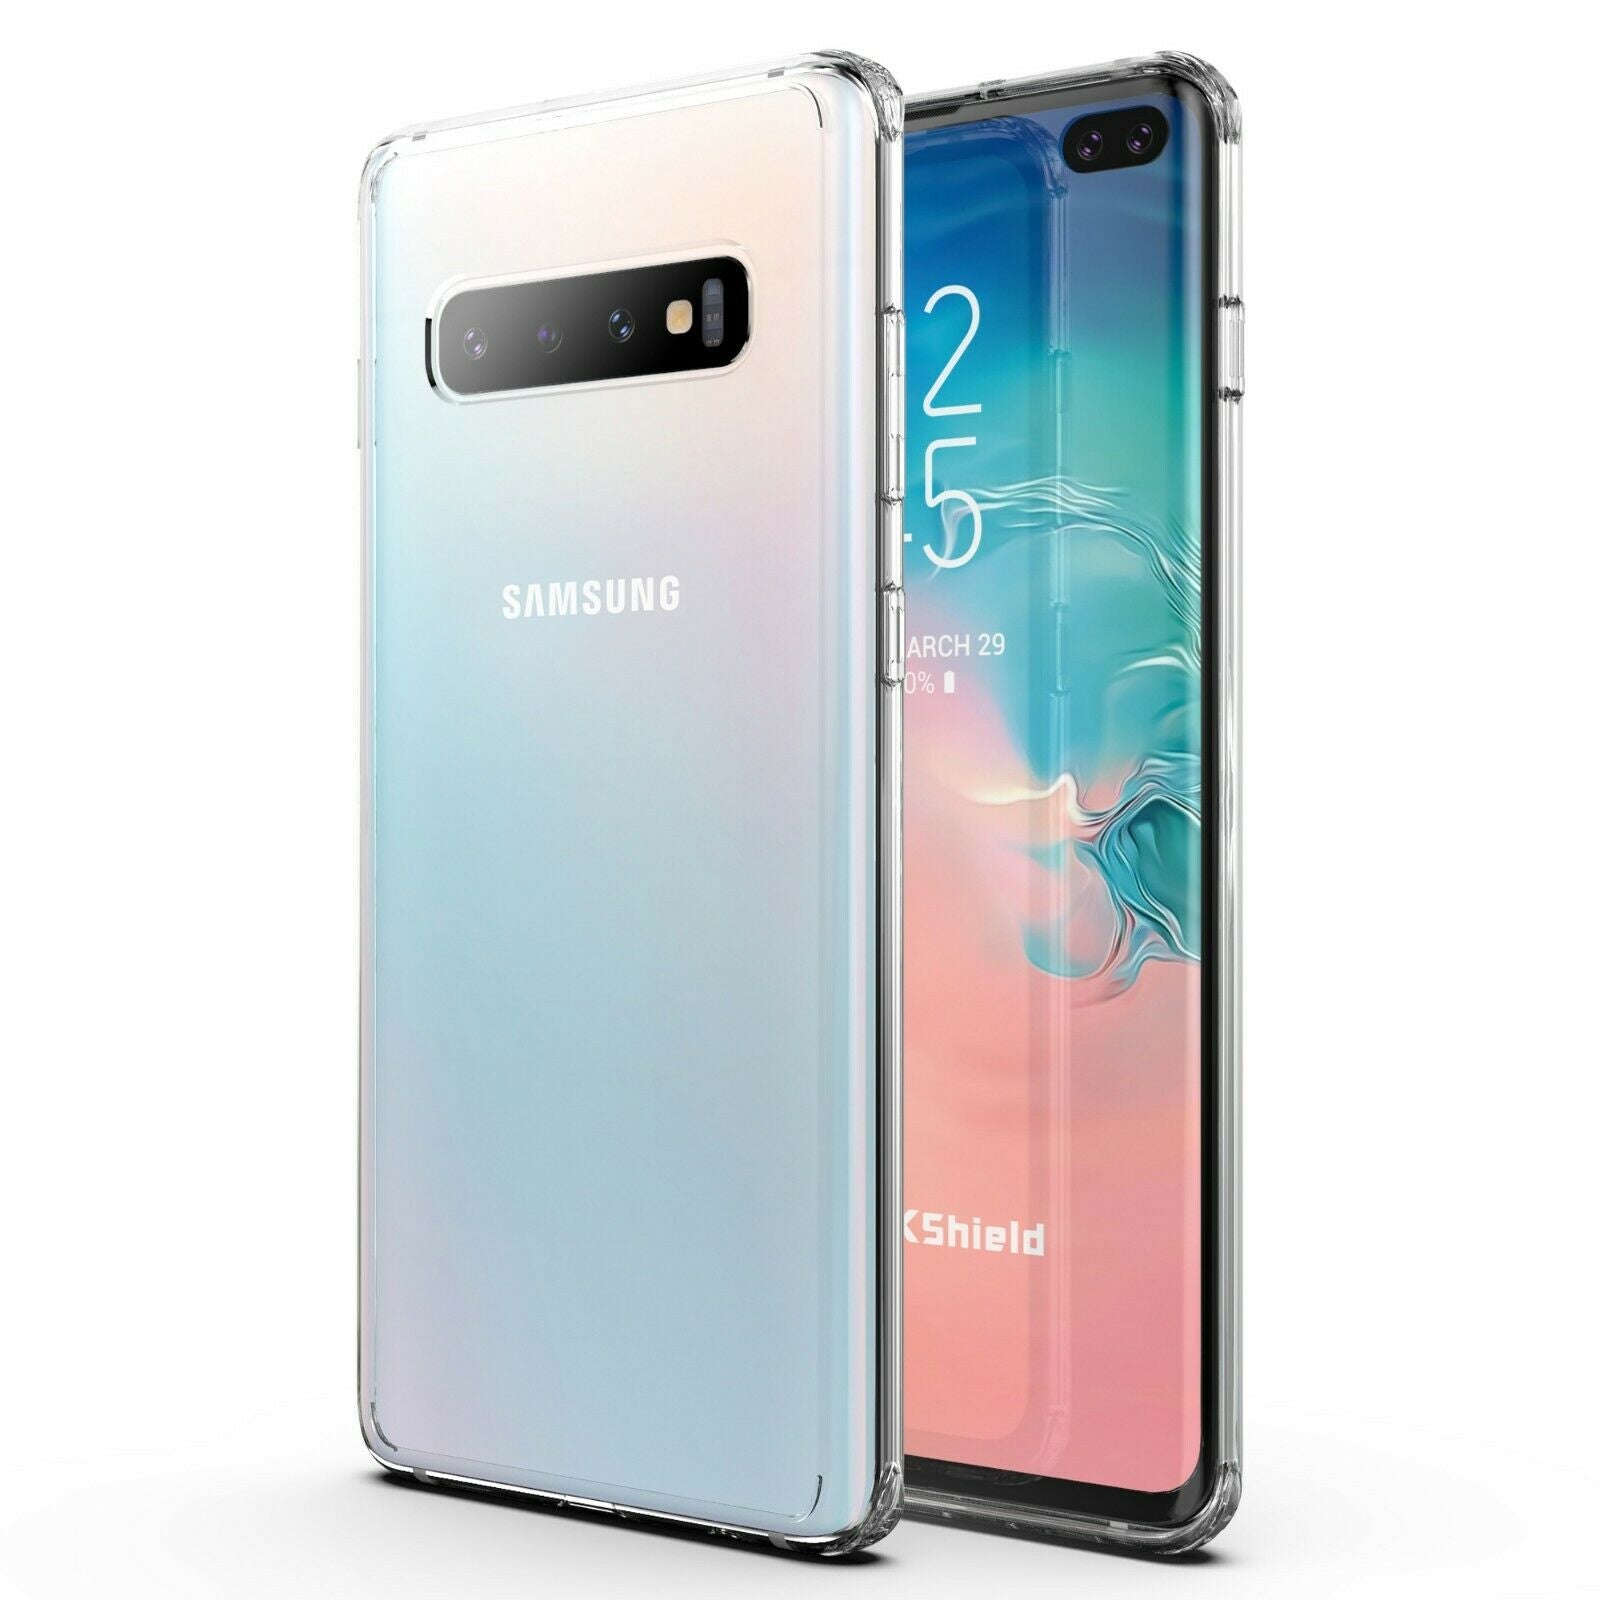 Samsung Galaxy S10 5G Case Shockproof Crystal Bumper Case Cover